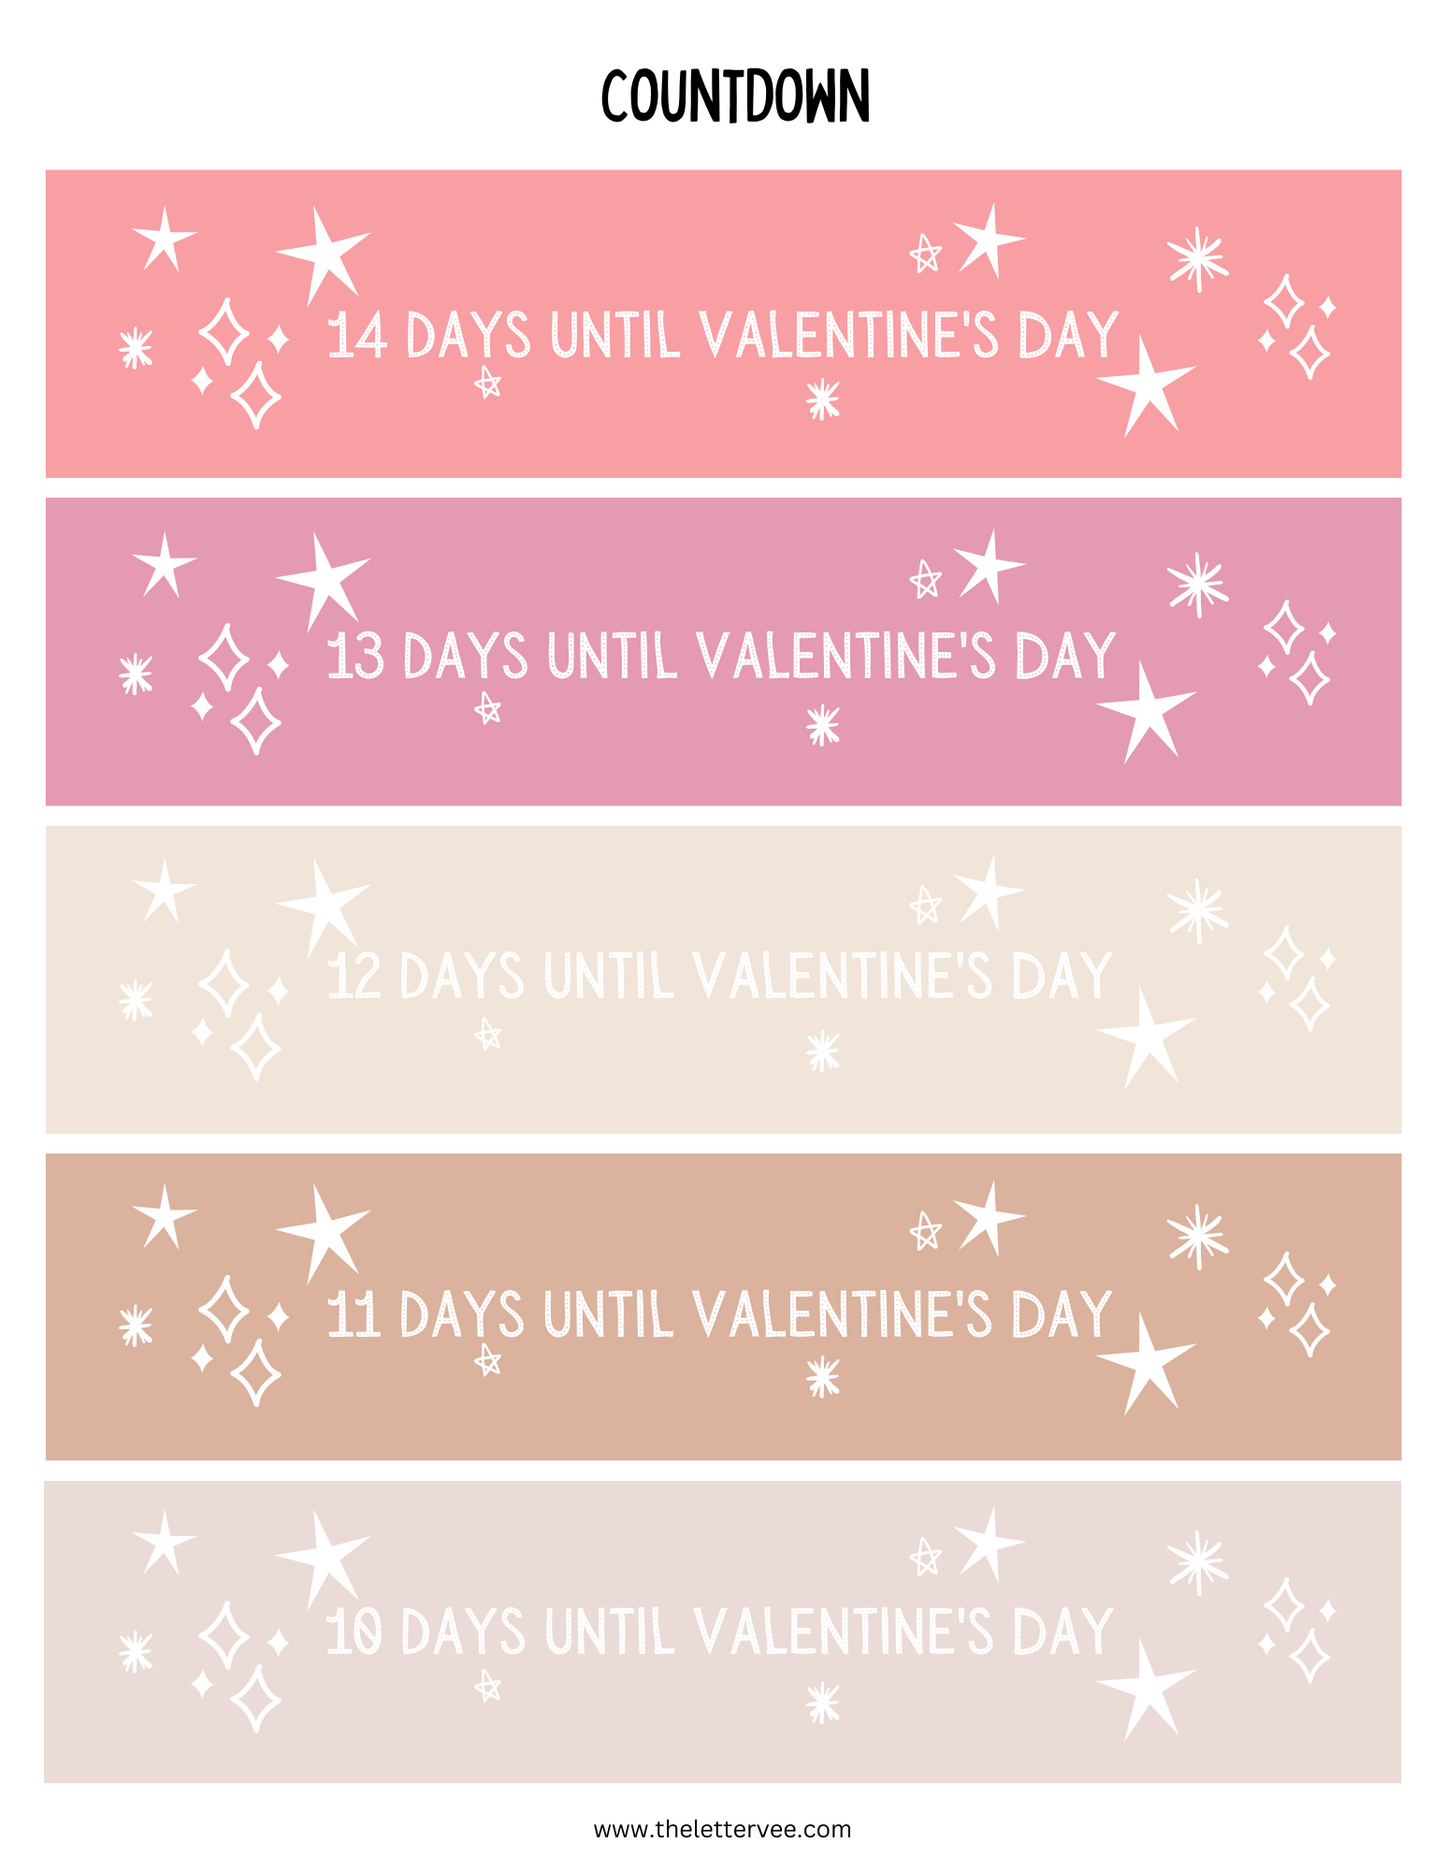 Paper Chain Countdown | Valentines